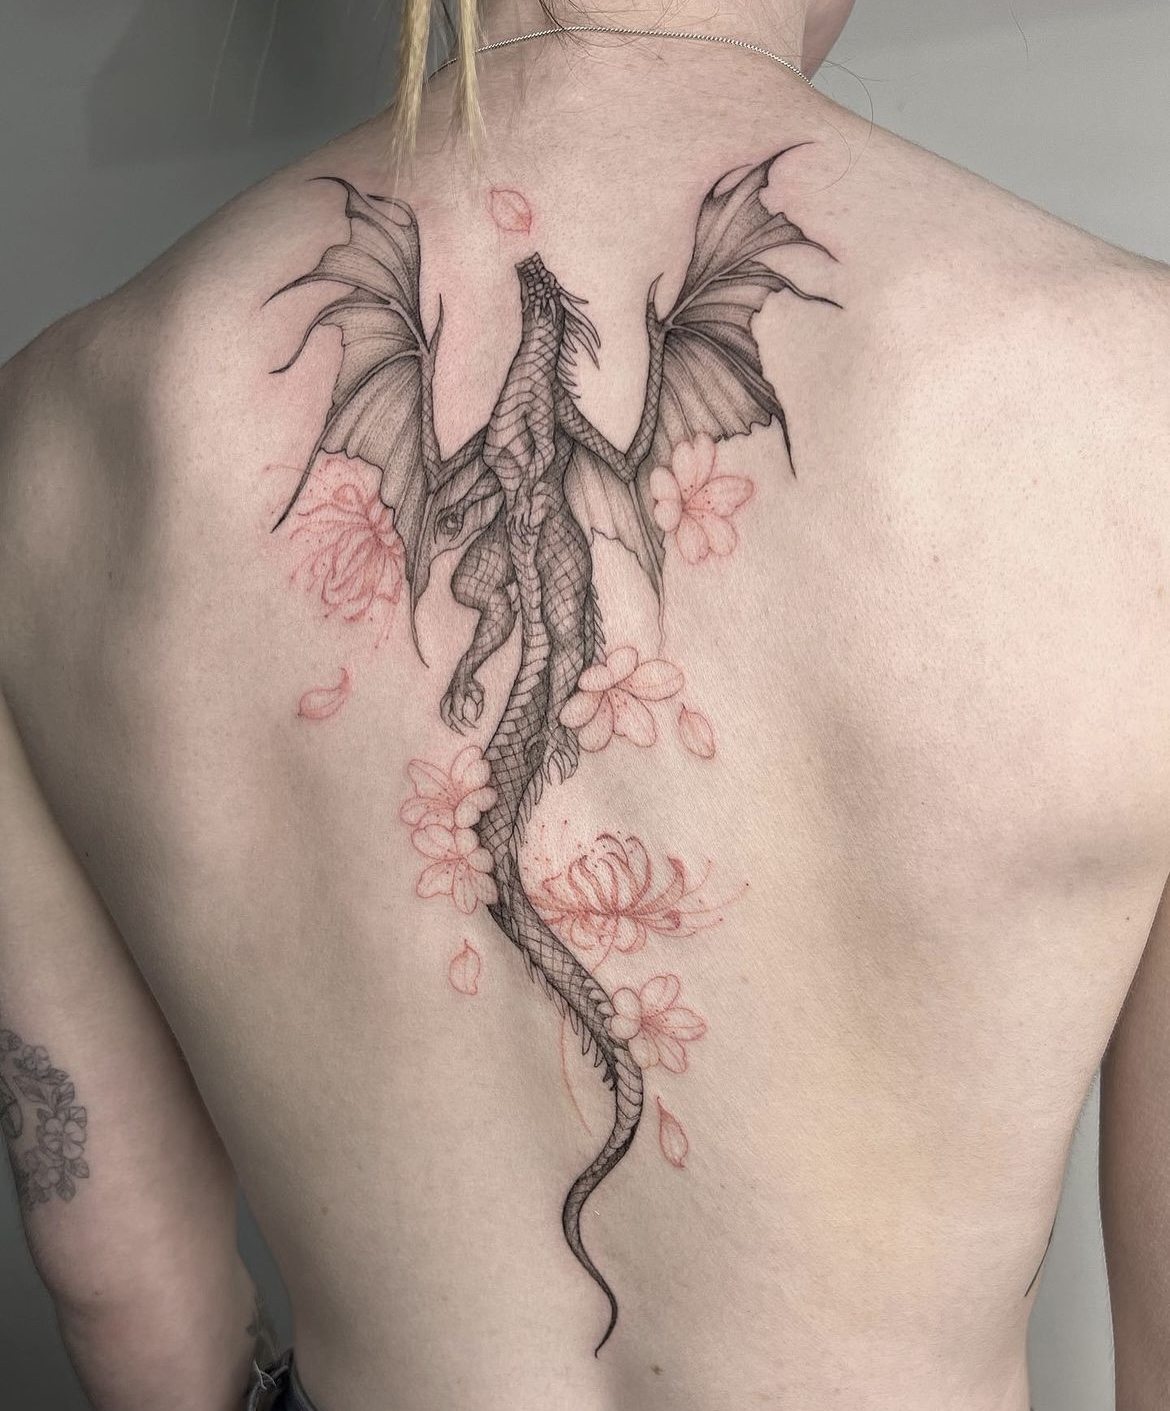 Red dragon for Michelle     tattoo smalltattoo fineline  finelinetattoo tattoogoldcoast goldcoast tattooideas tattoos   Instagram